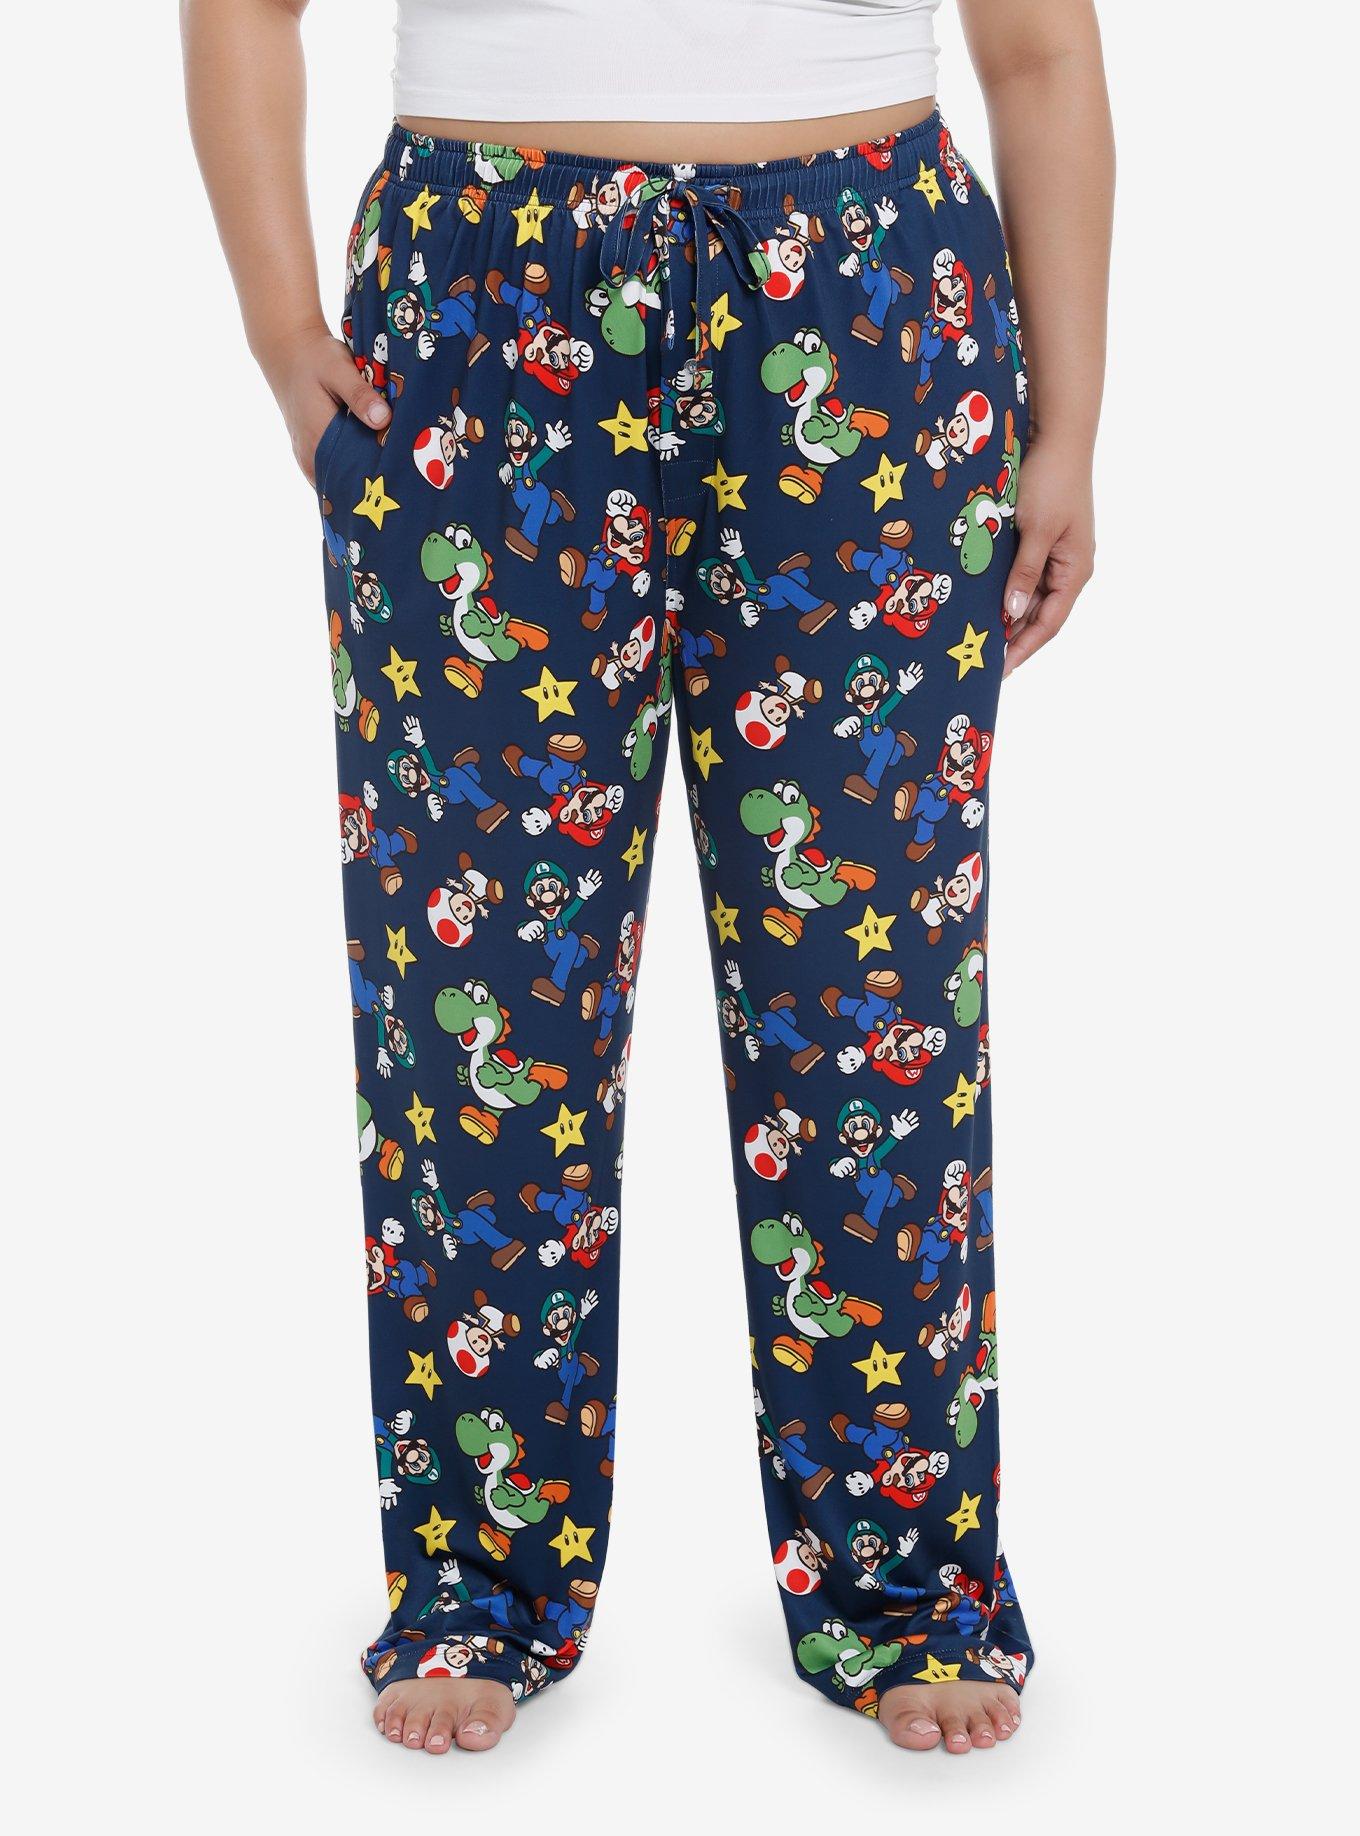 Super Mario Bros. Characters Girls Pajama Pants Plus Size